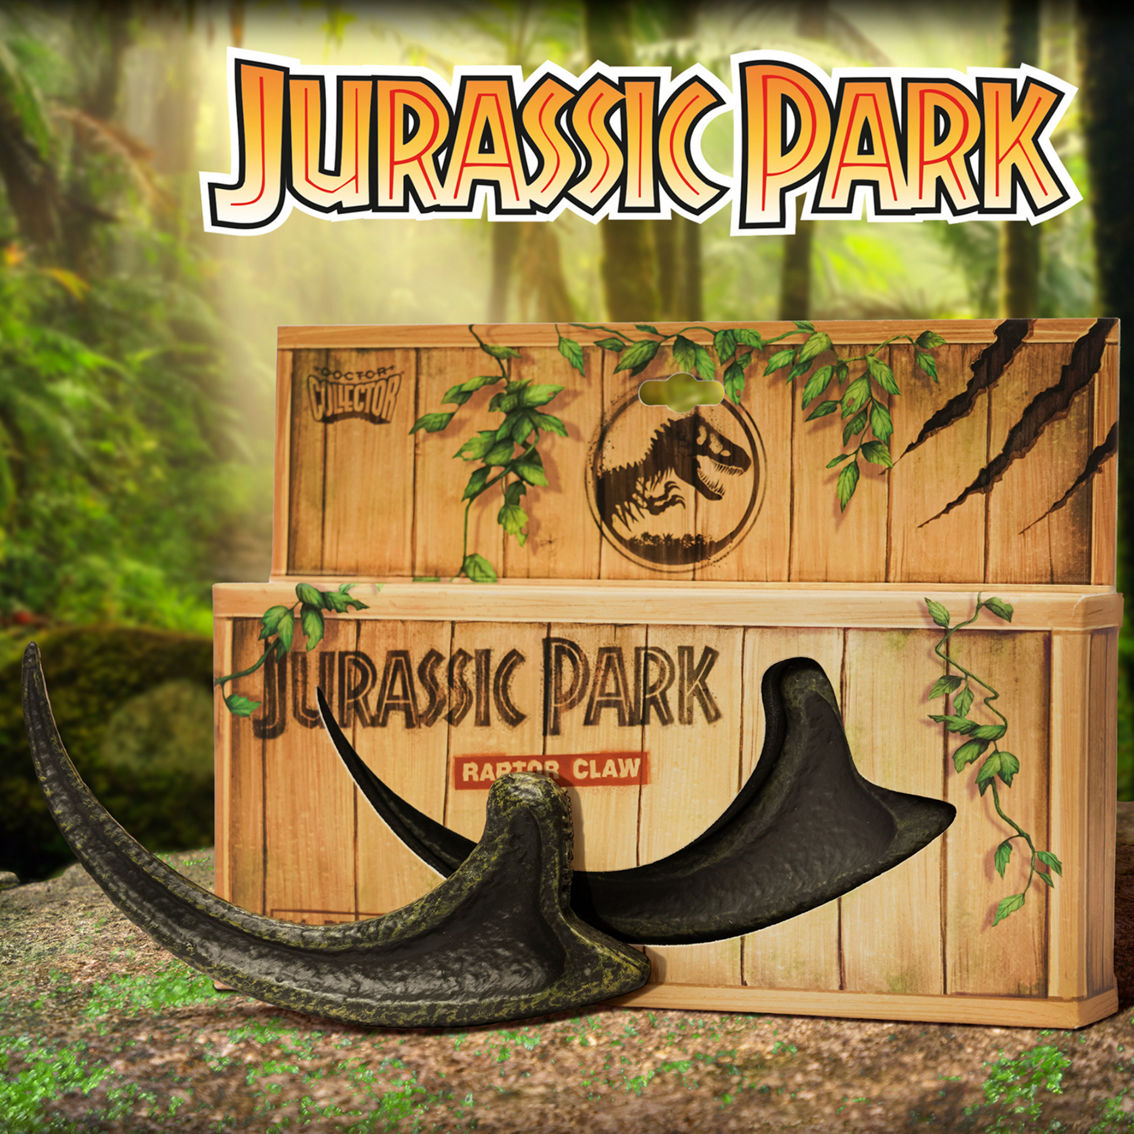 Jurassic Park Raptor Claw - Image 4 of 5